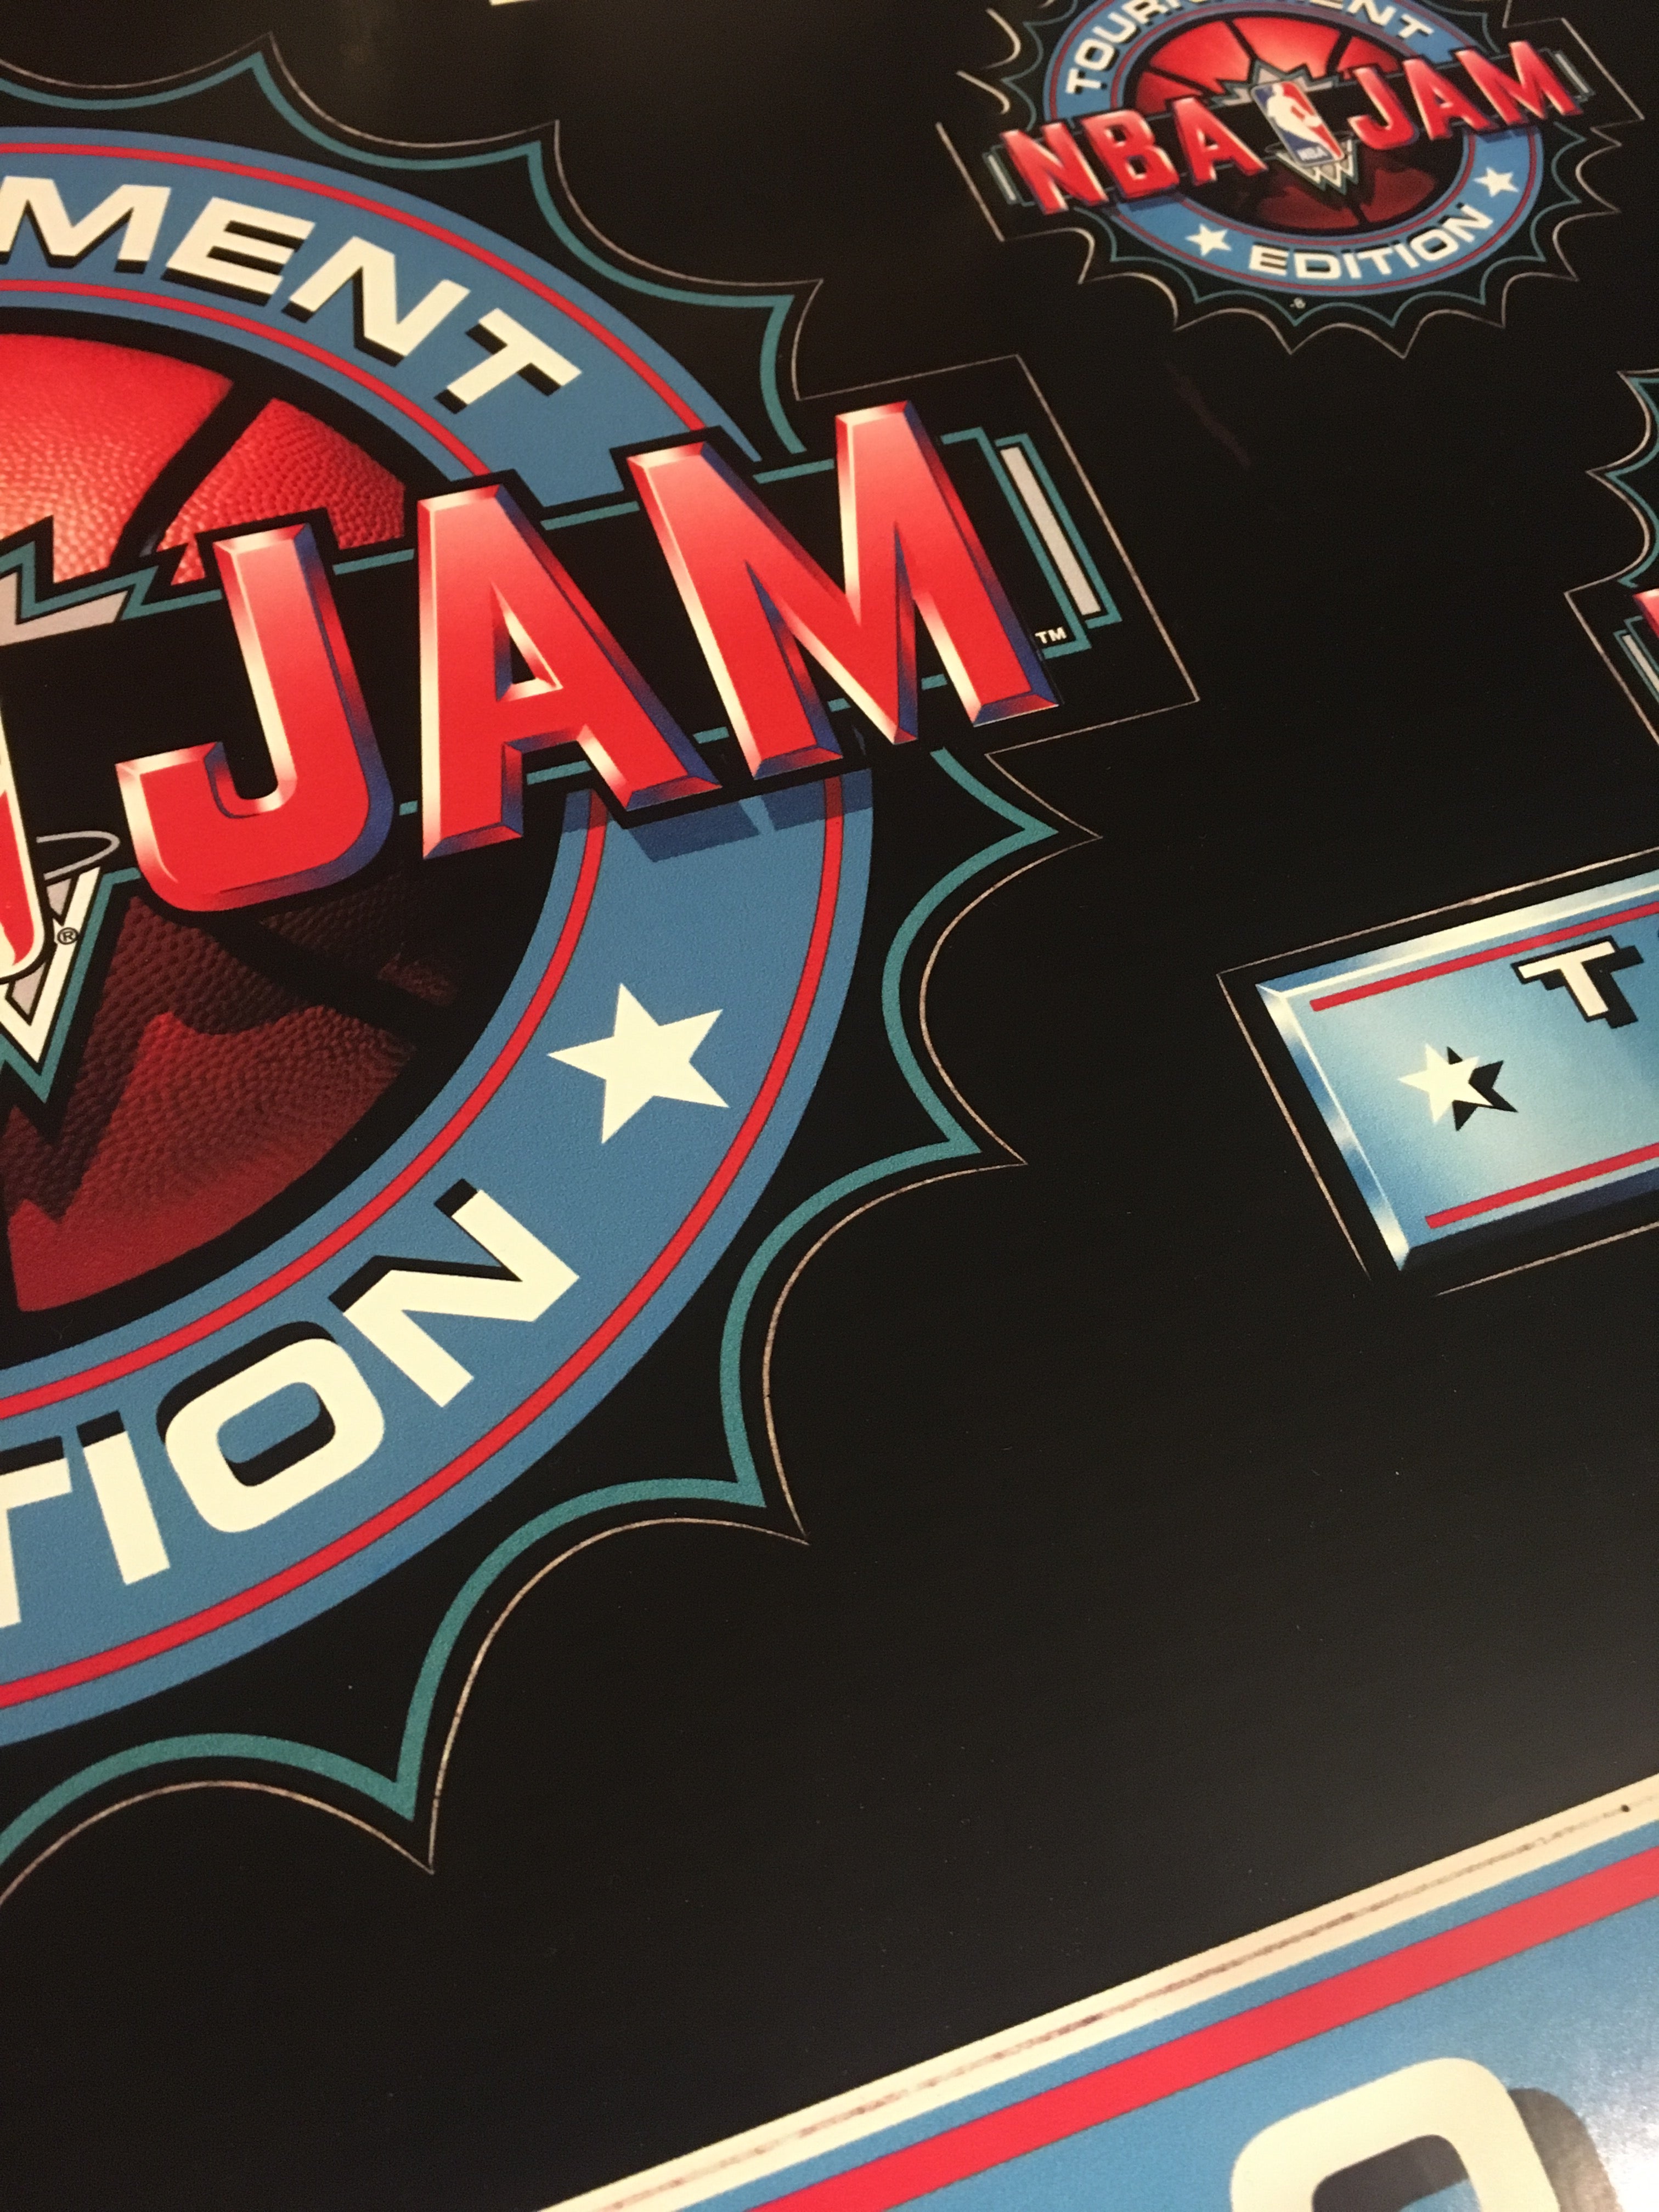 NBA Jam Tournament Edition Conversion Kit Art